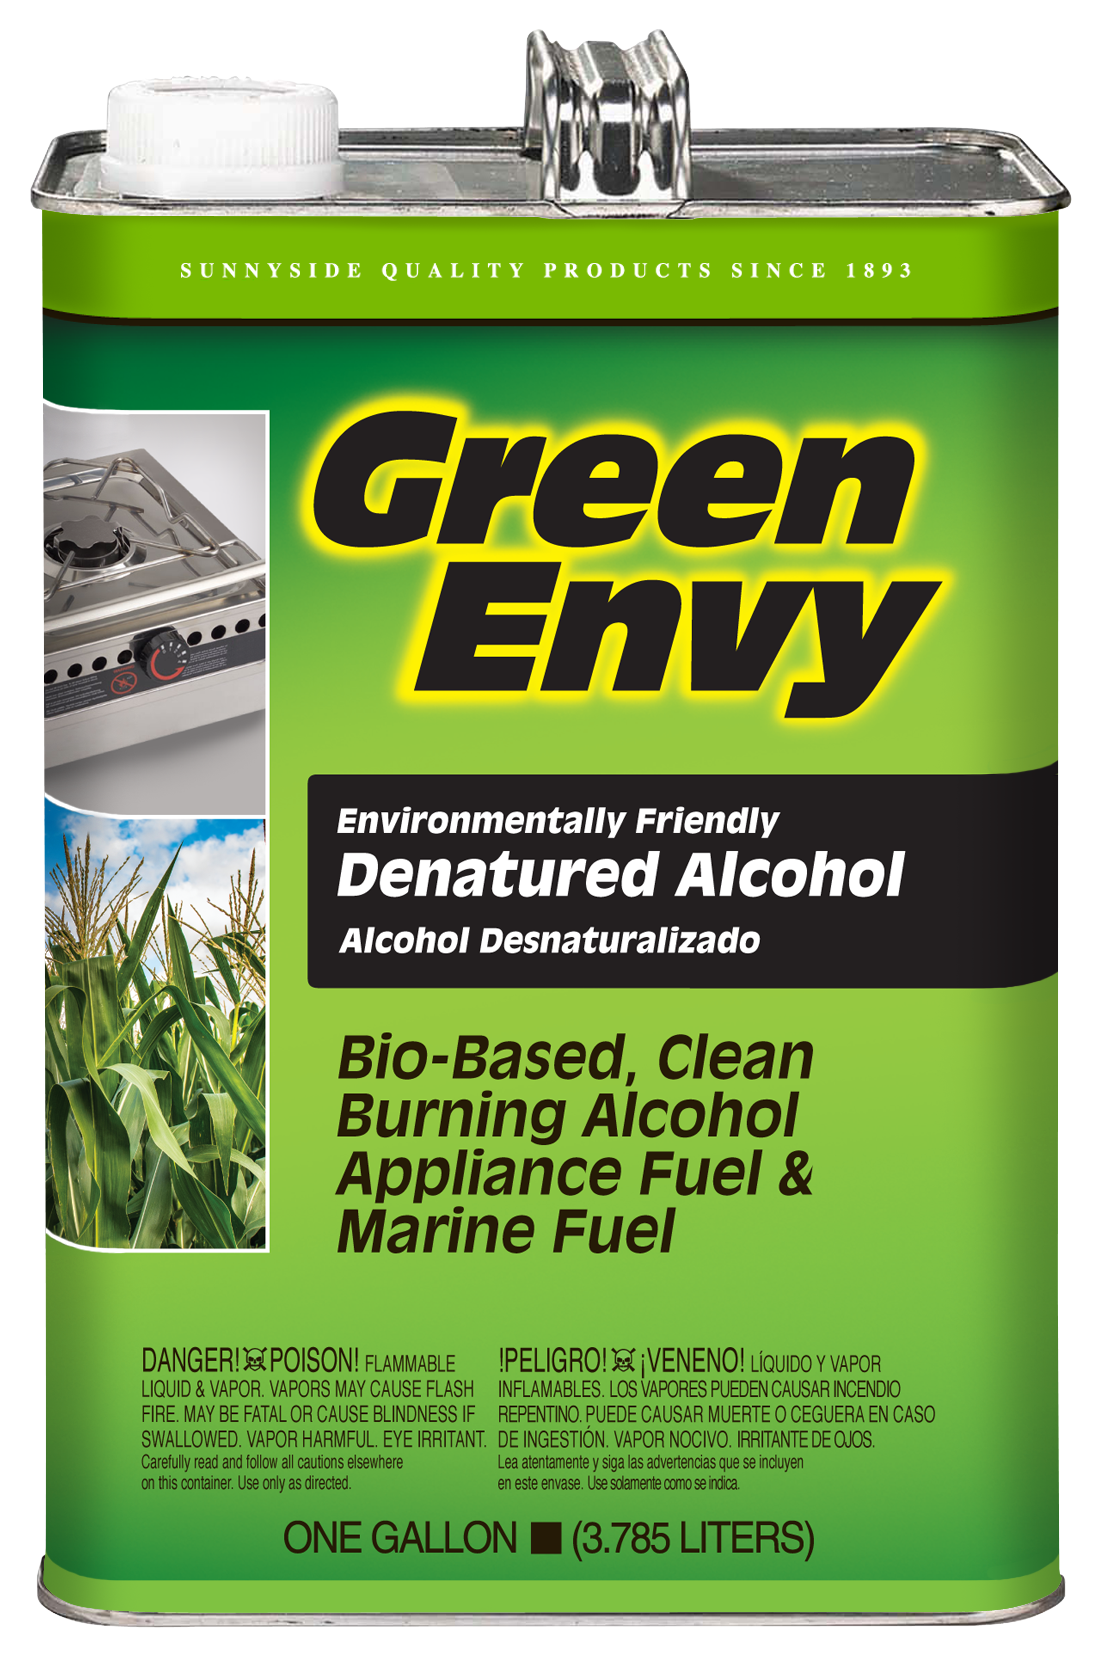 GREEN ENVY DENATURED ALCOHOL Product Image